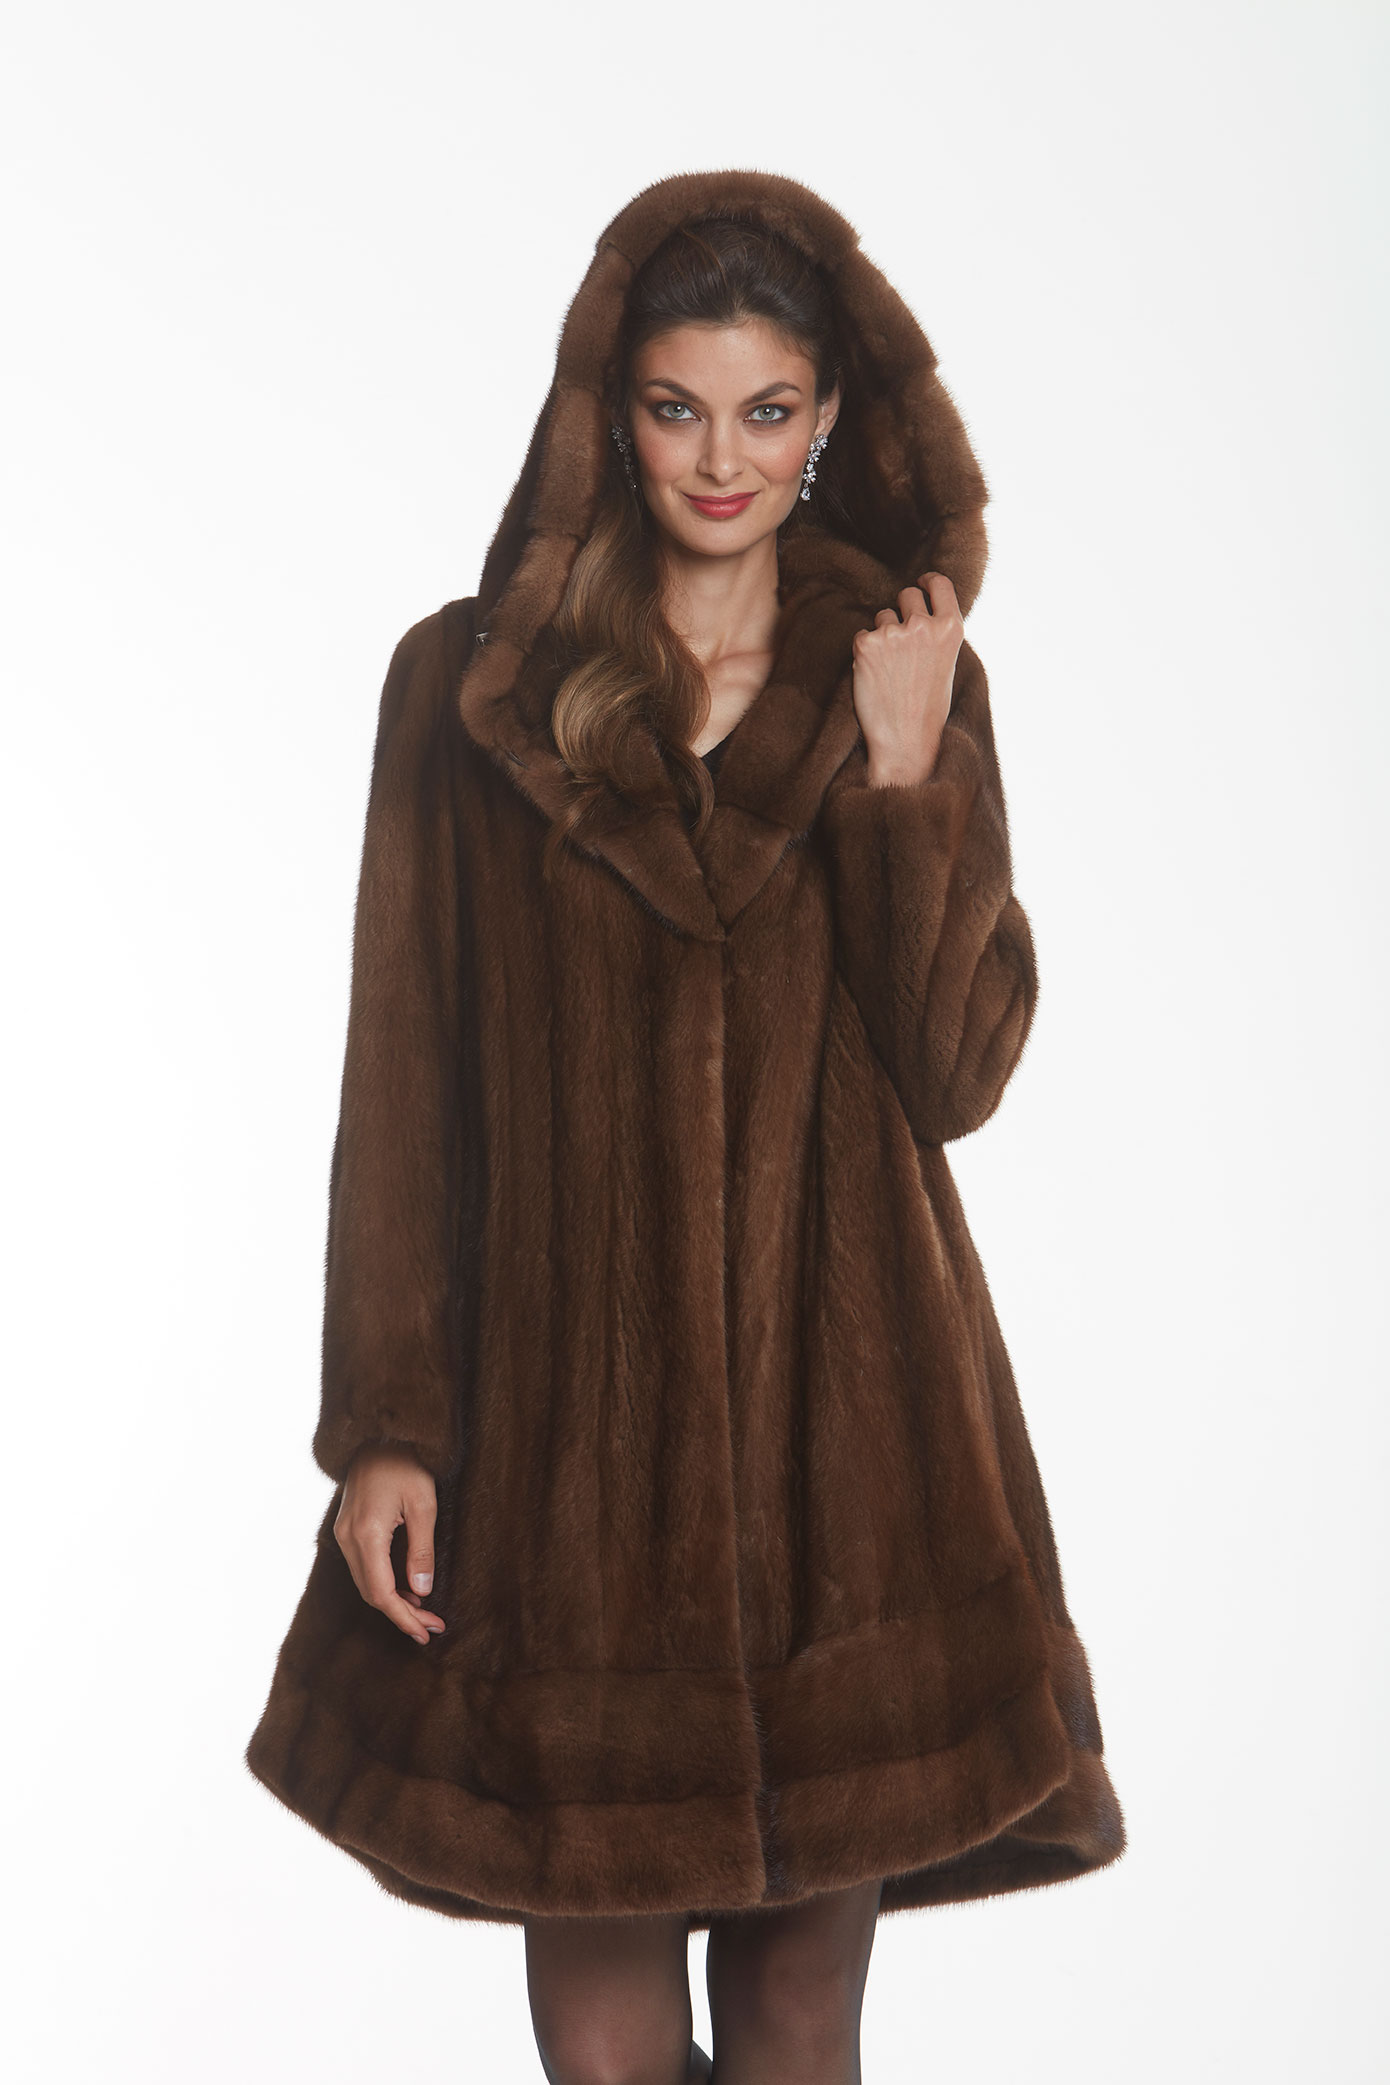 Plus Size Mink Fur Jacket Ranch Shawl Collar Madison Avenue Mall Furs